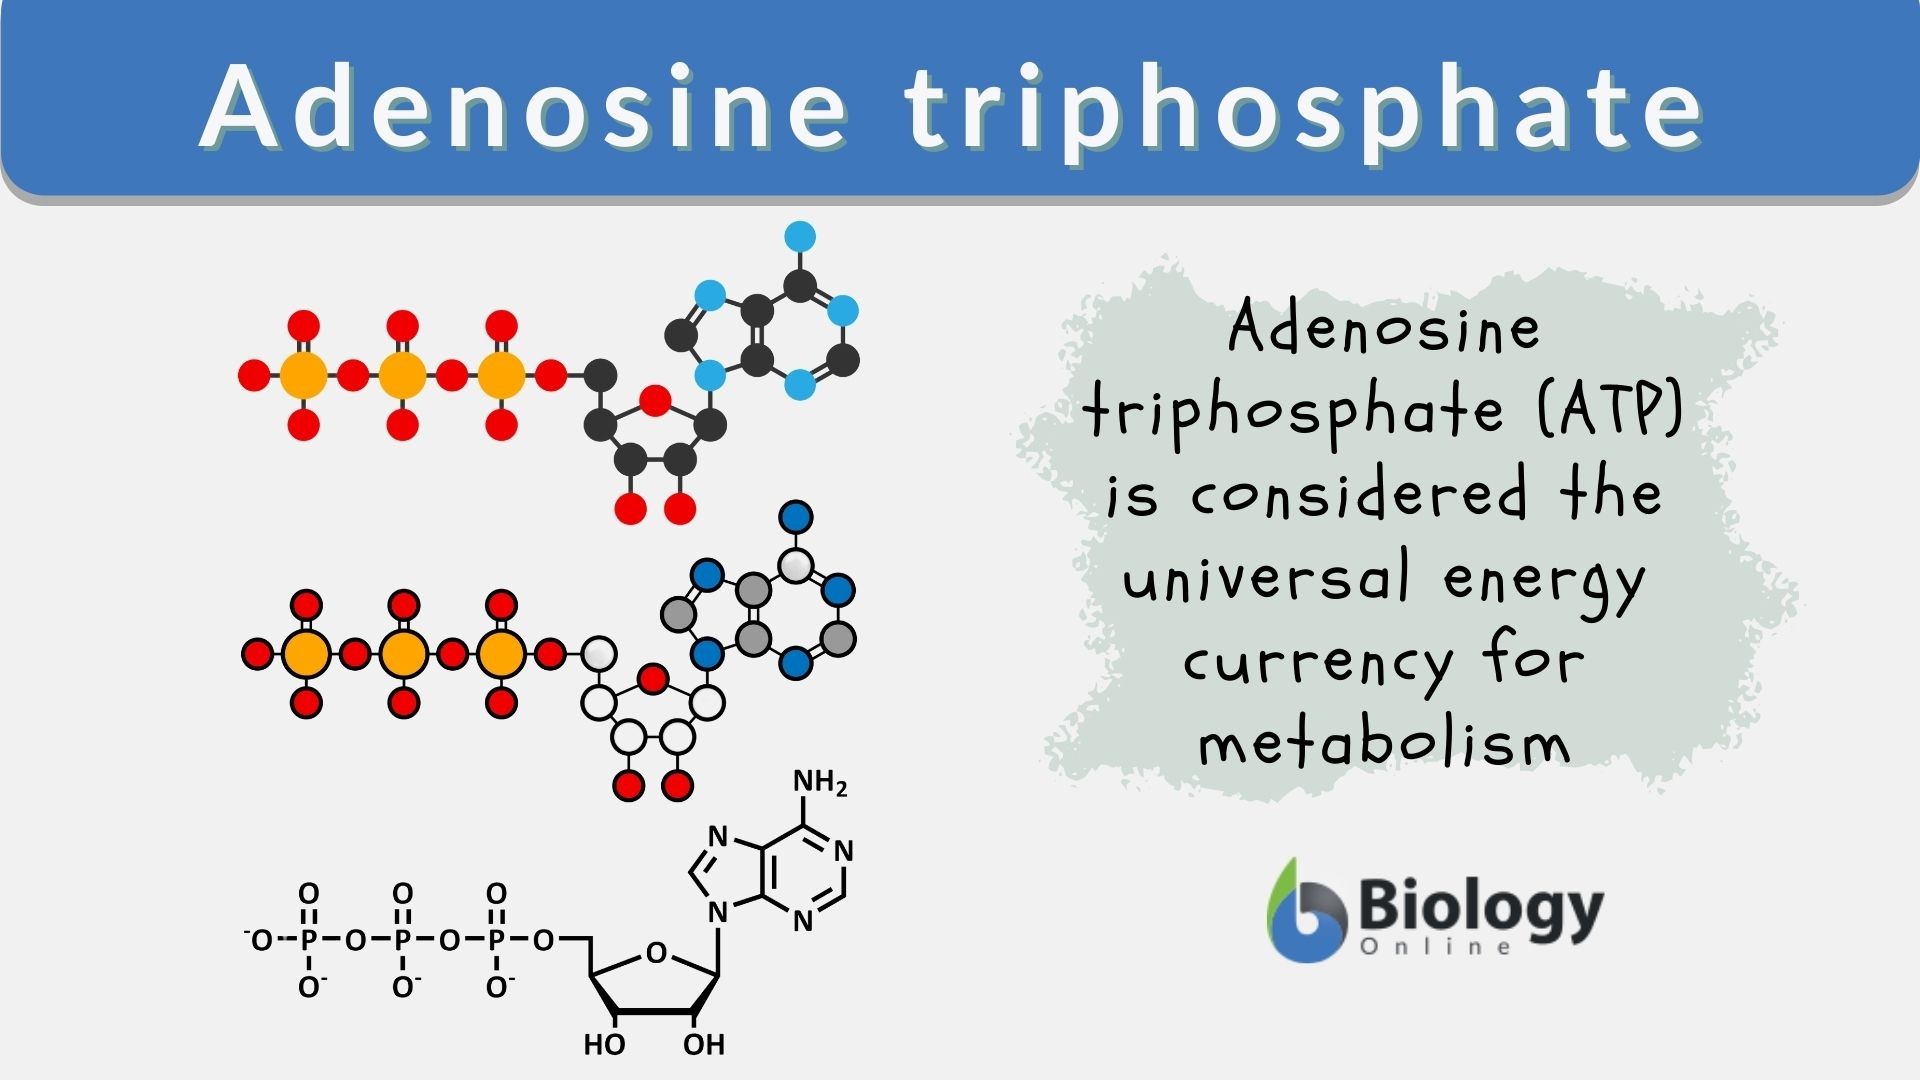 Adenosine triphosphate